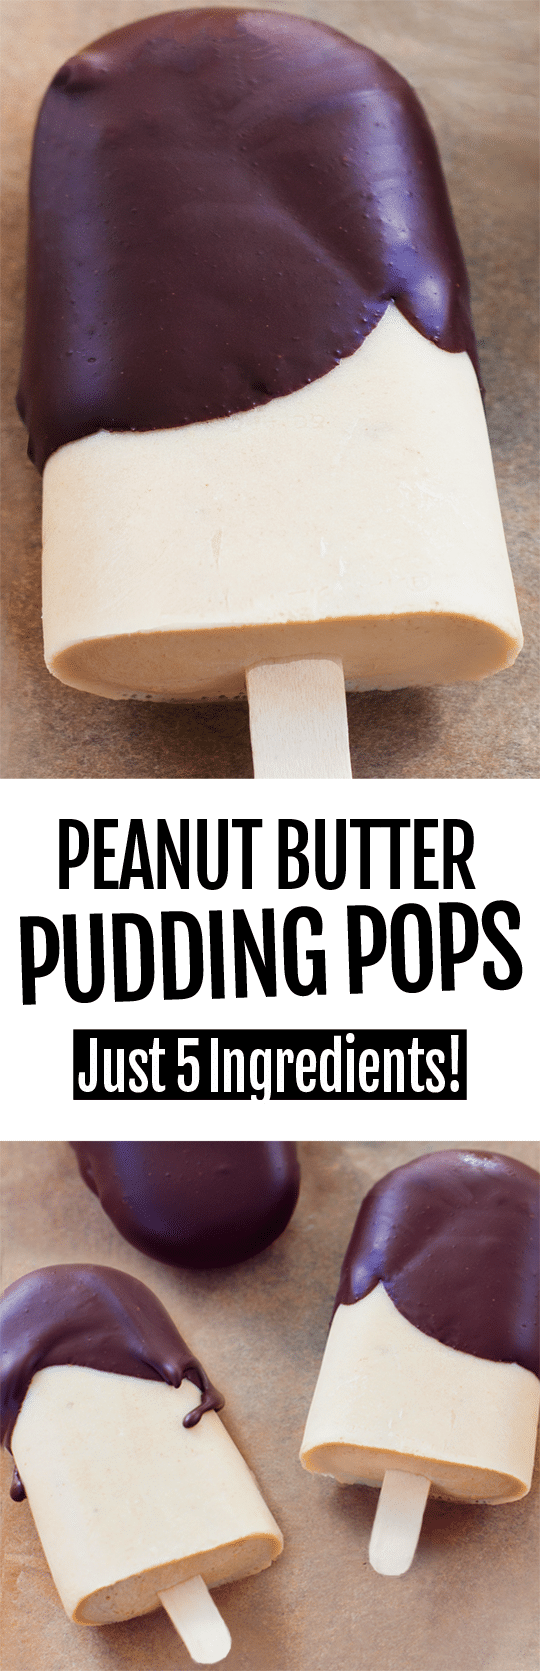 5 Ingredient Peanut Butter Pudding Pop Recipe